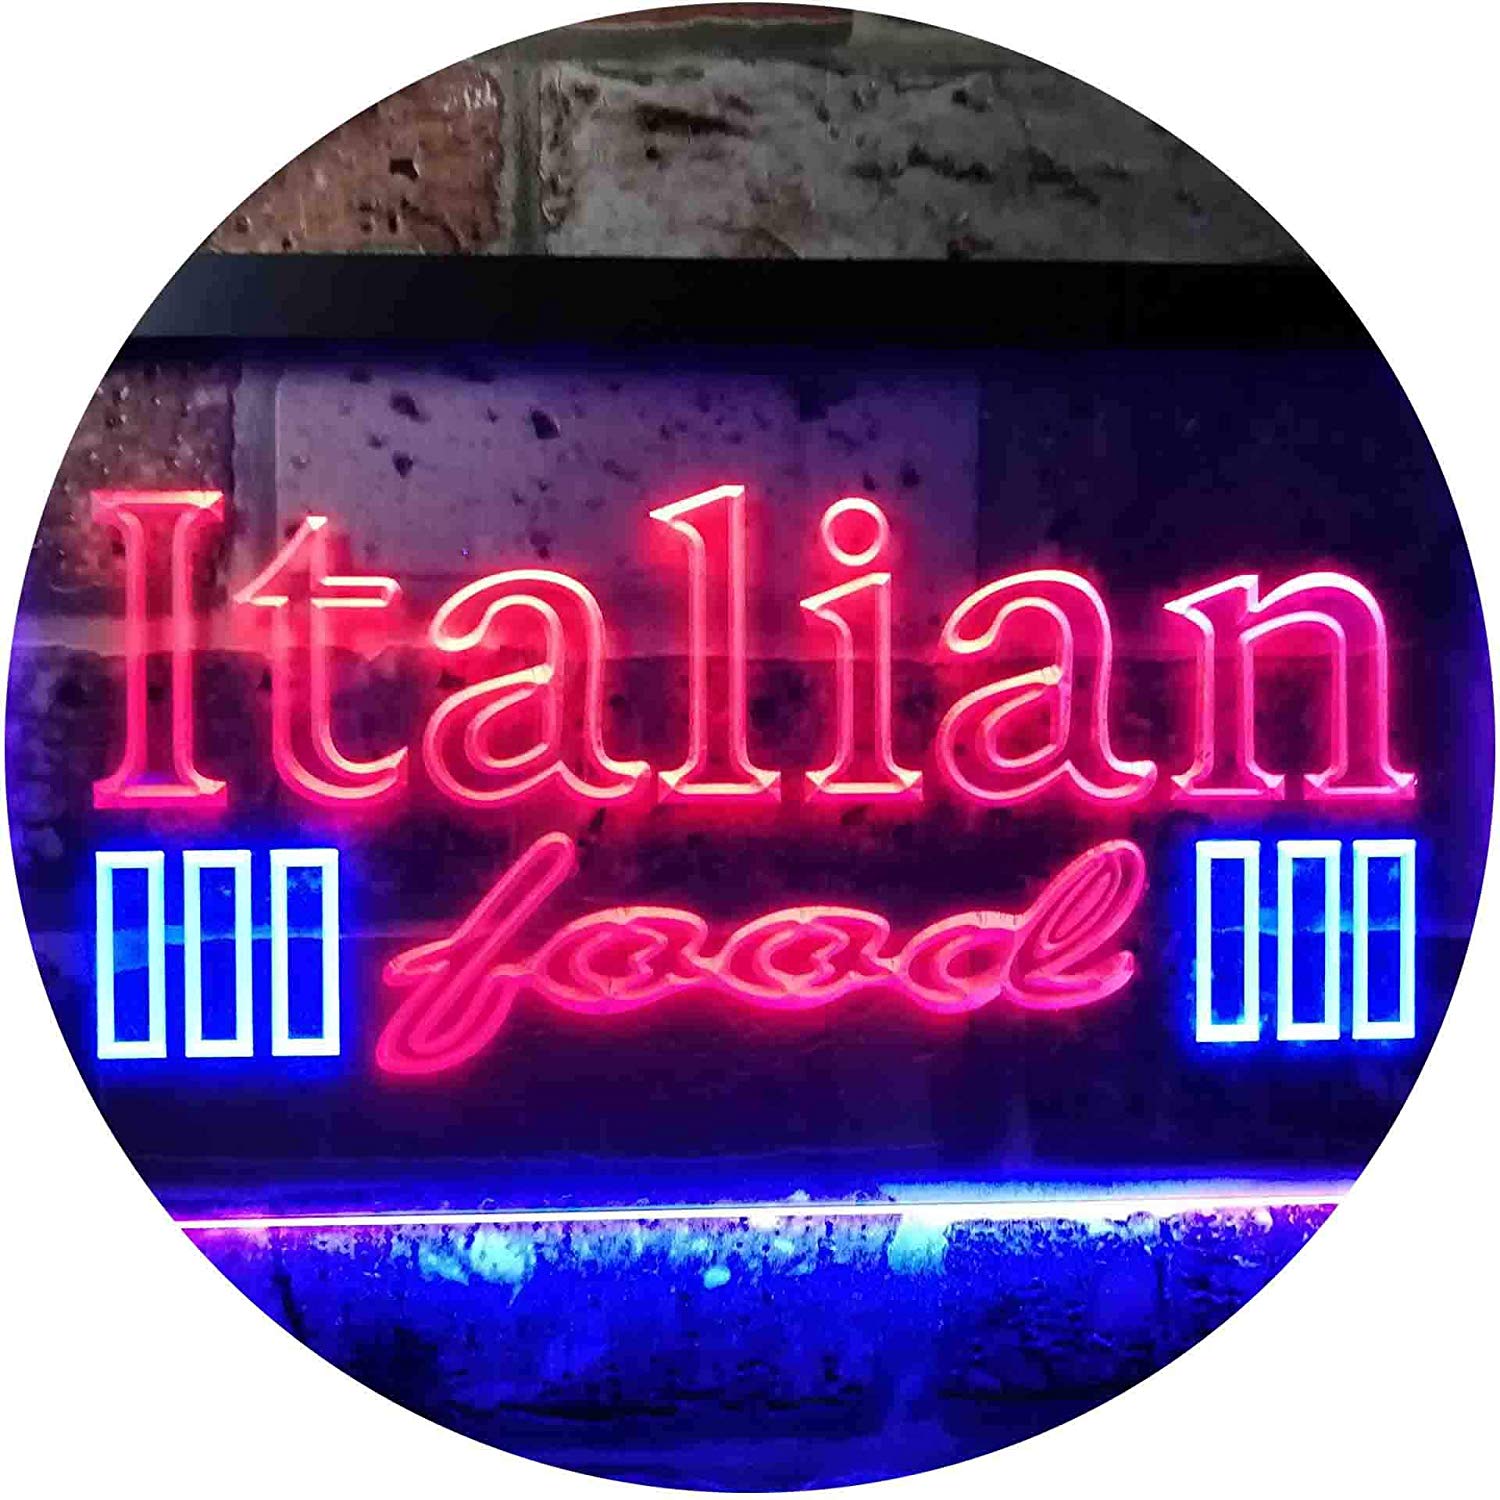 Restaurant Italian Food LED Neon Light Sign | Way Up Gifts